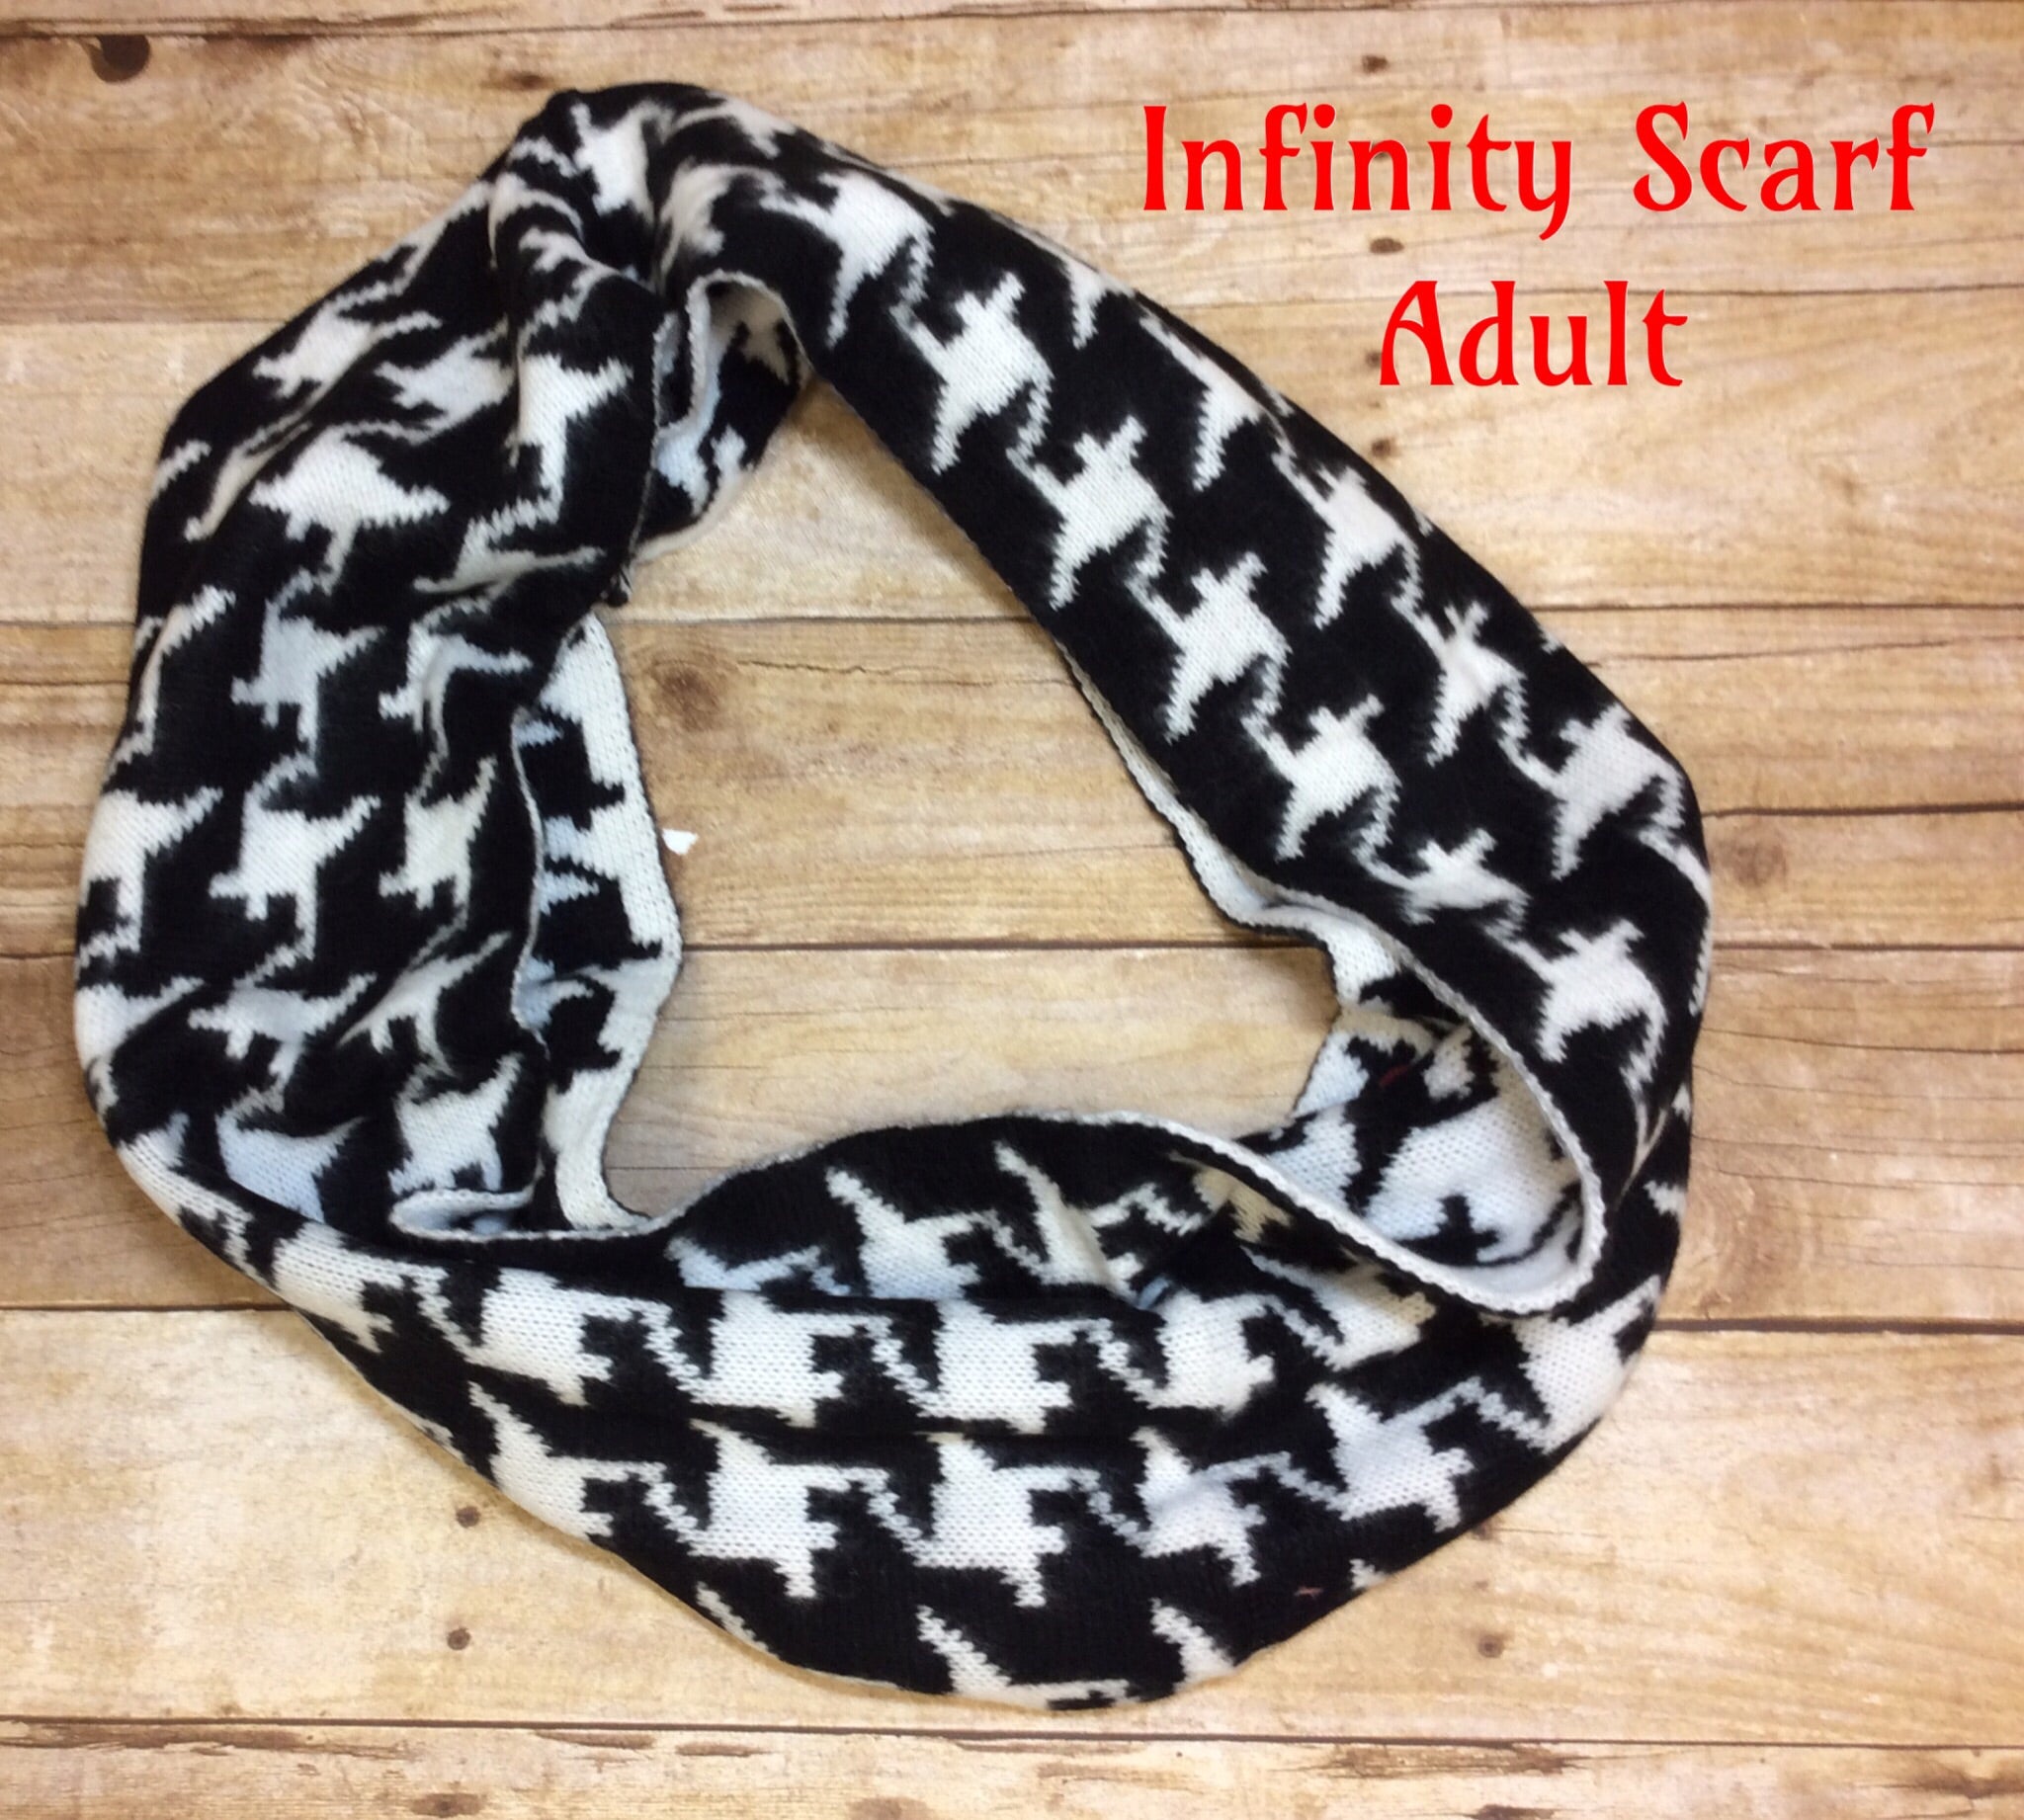 Scarf (infinityScarf)